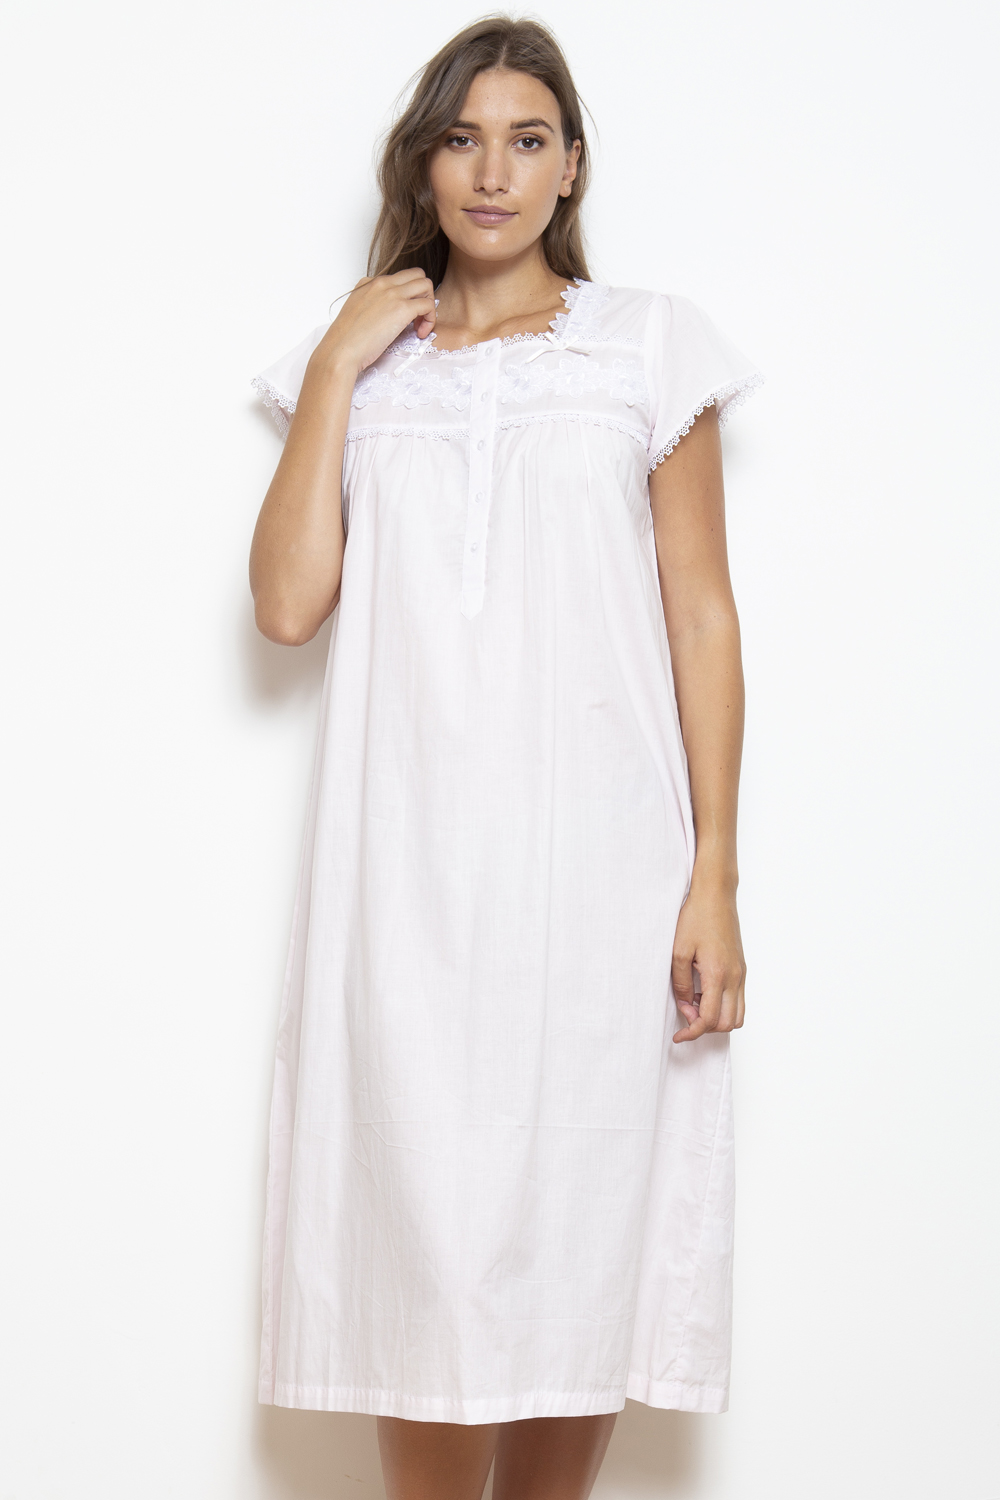 white cotton nightdresses